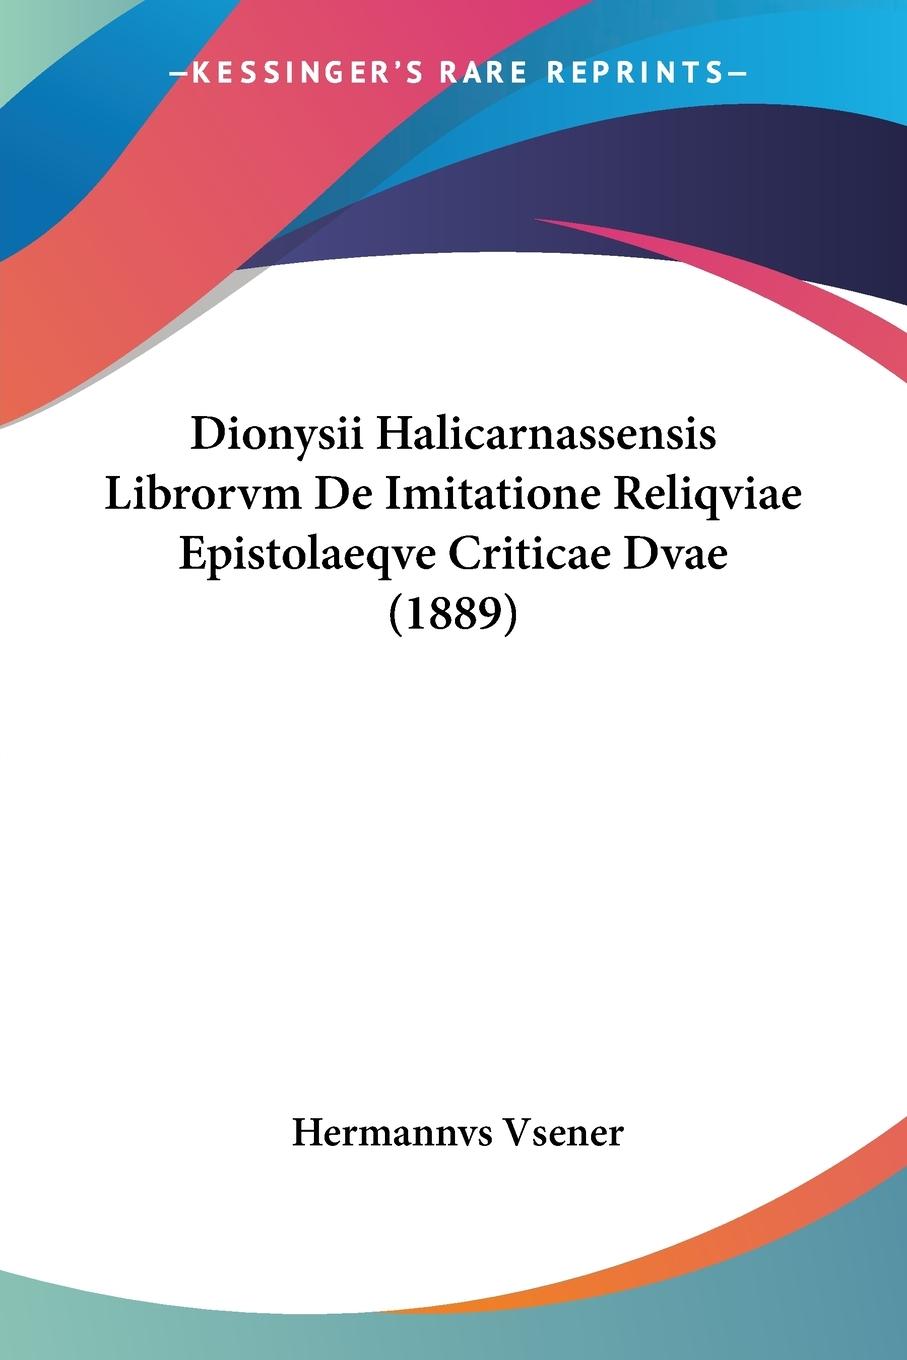 Dionysii Halicarnassensis Librorvm De Imitatione Reliqviae Epistolaeqve Criticae Dvae (1889)